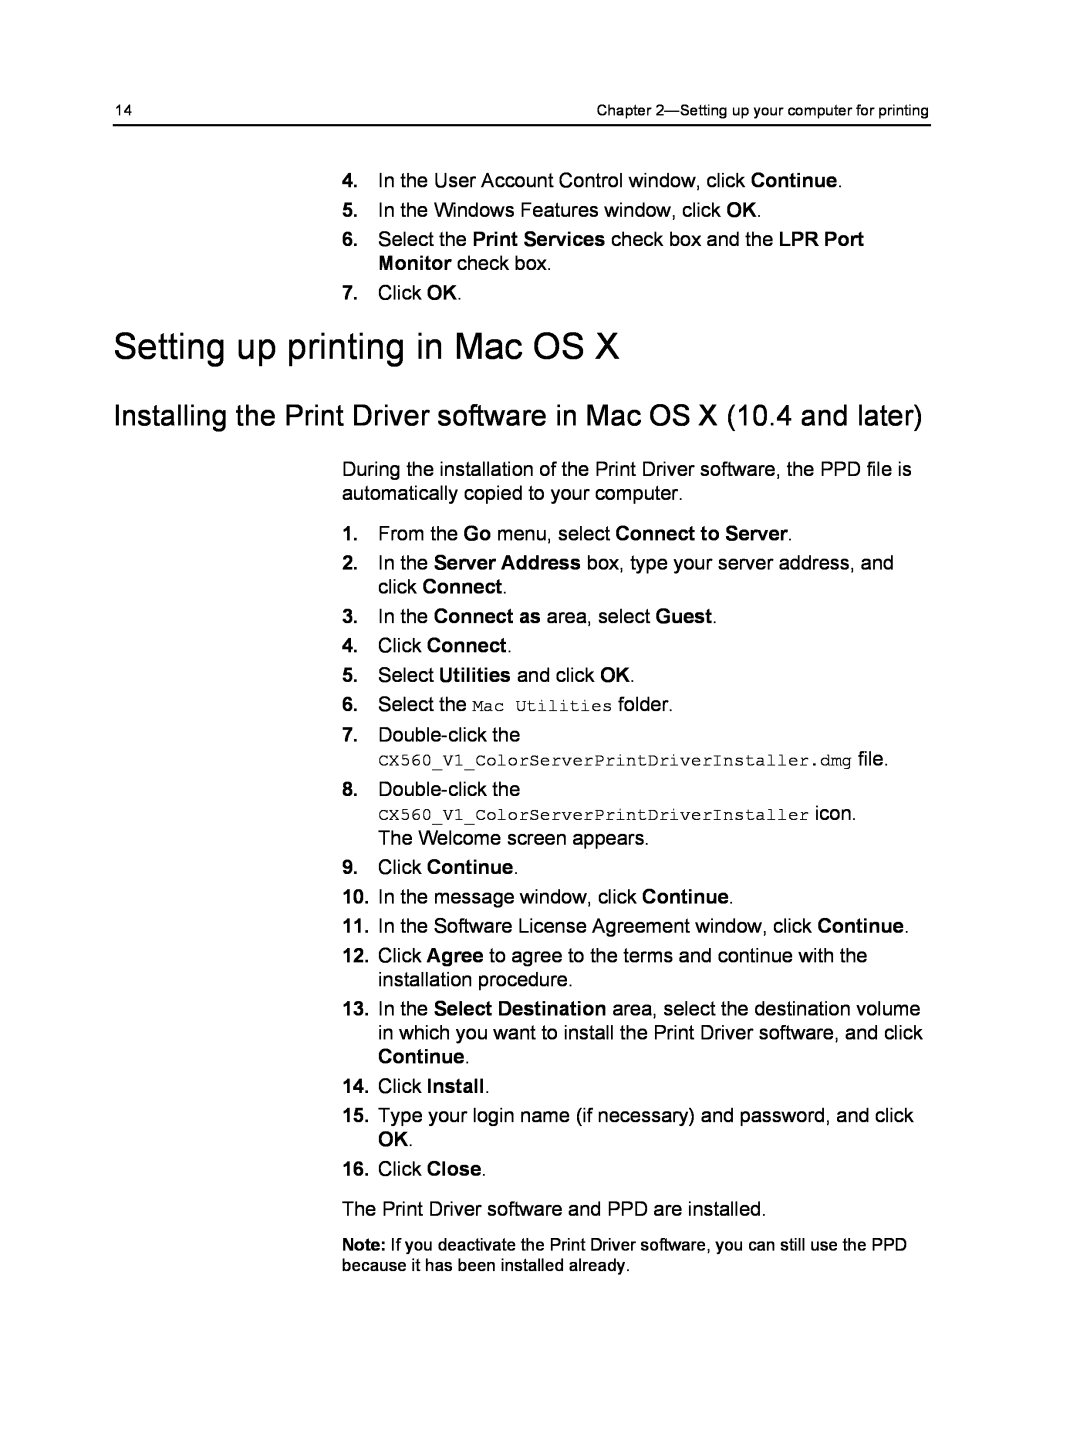 Xerox 560, 550 manual Setting up printing in Mac OS, Click Continue 